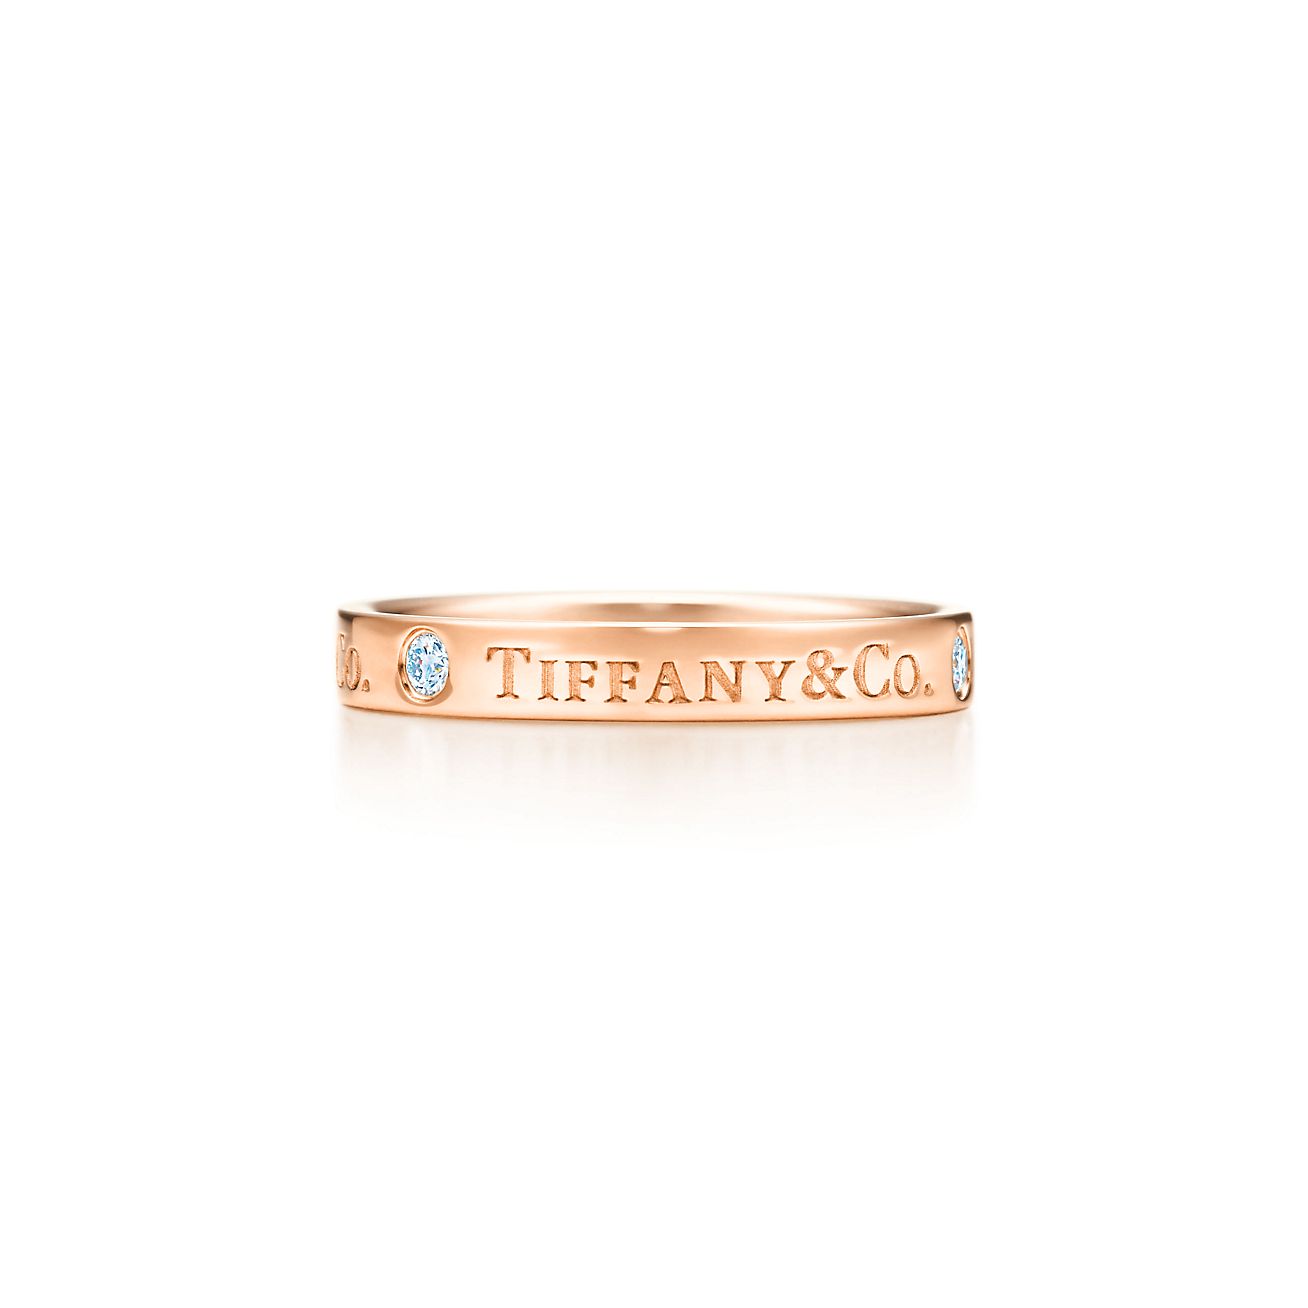 tiffany & co gold ring